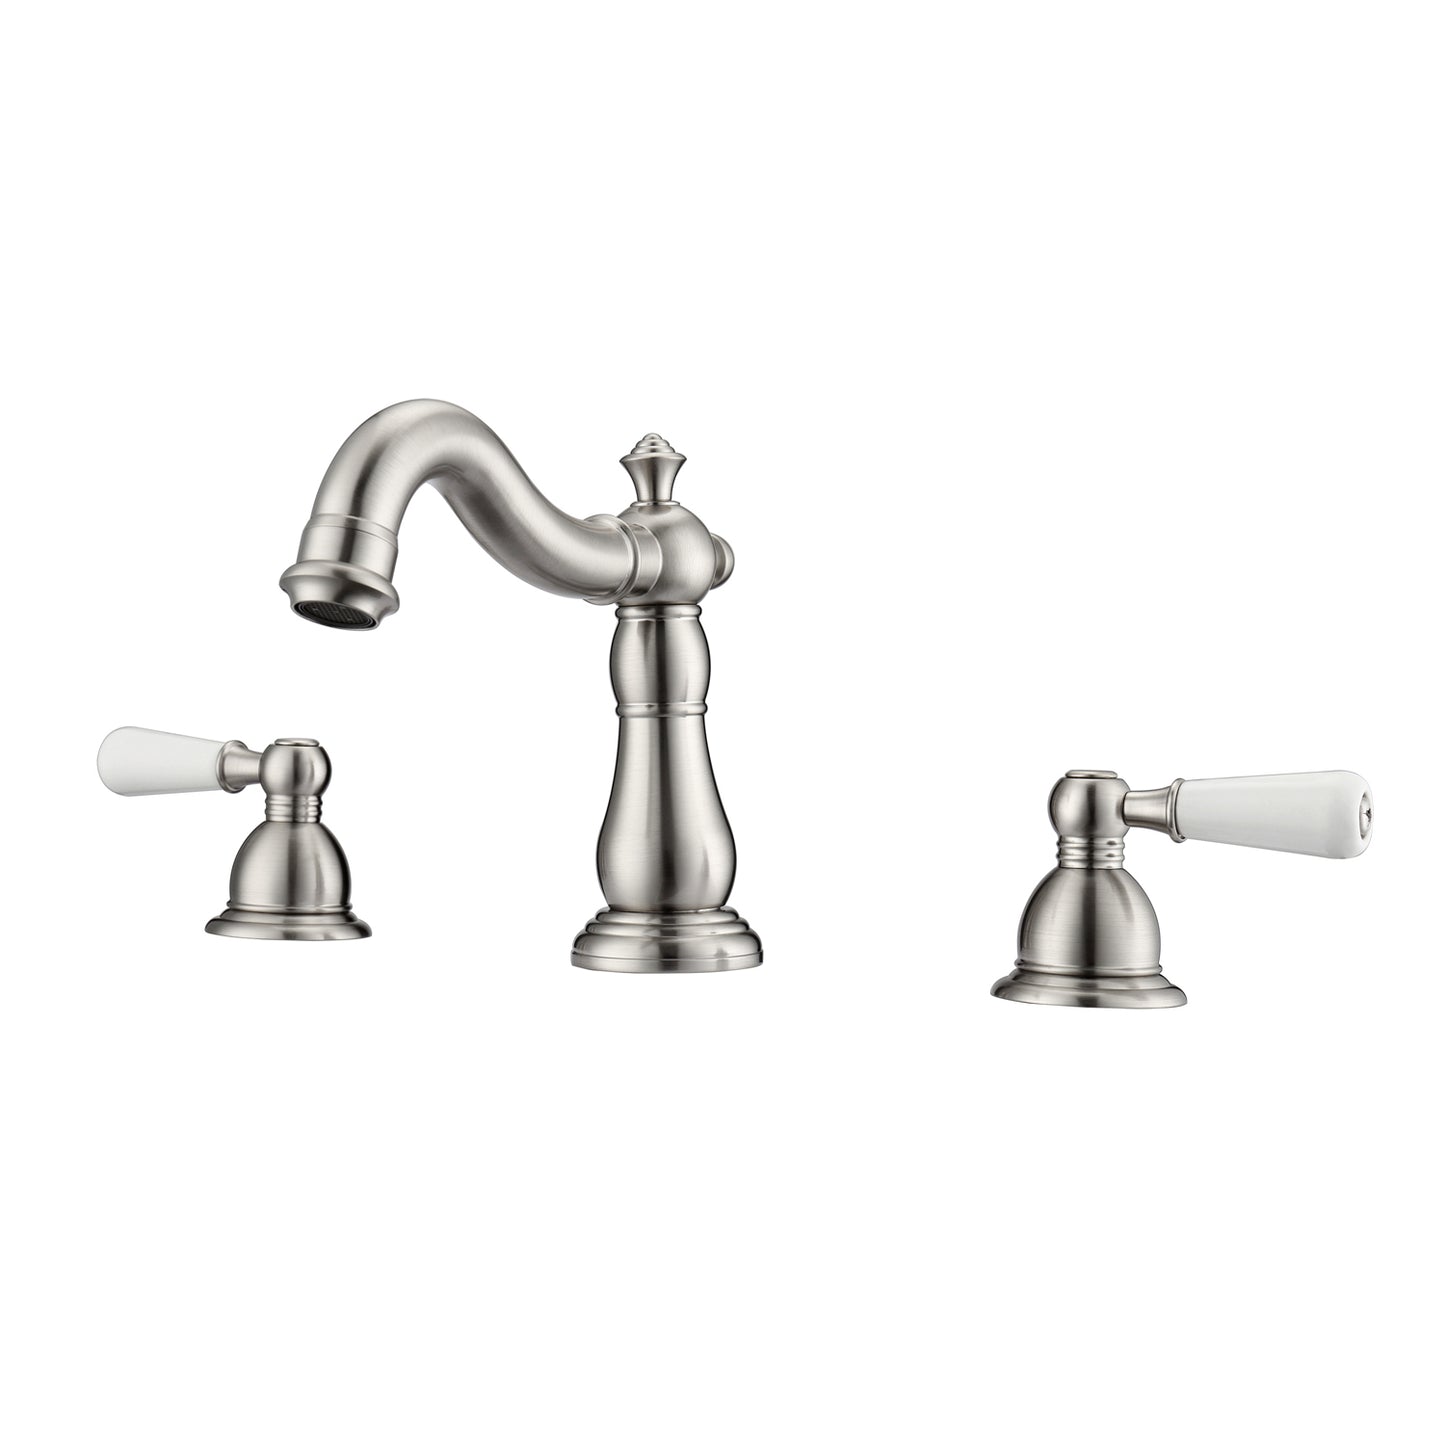 Aldora 8" Widespread Brushed Nickel Bathroom Faucet with Porcelain Lever Handles